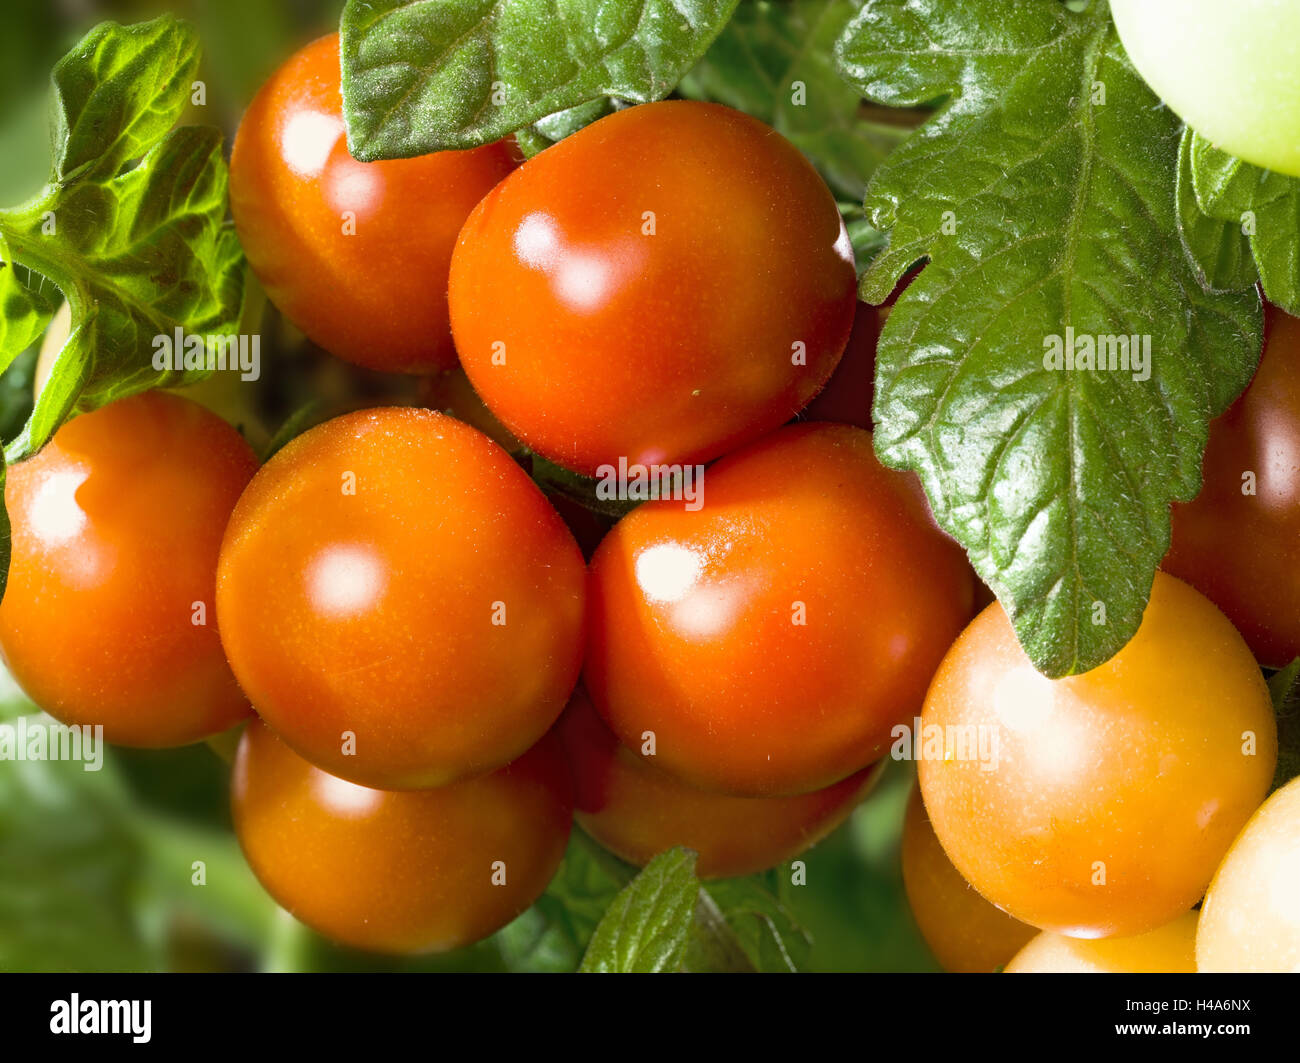 Tomato shrub, Solanum lycopersicum L., leaves, fruits, Stock Photo